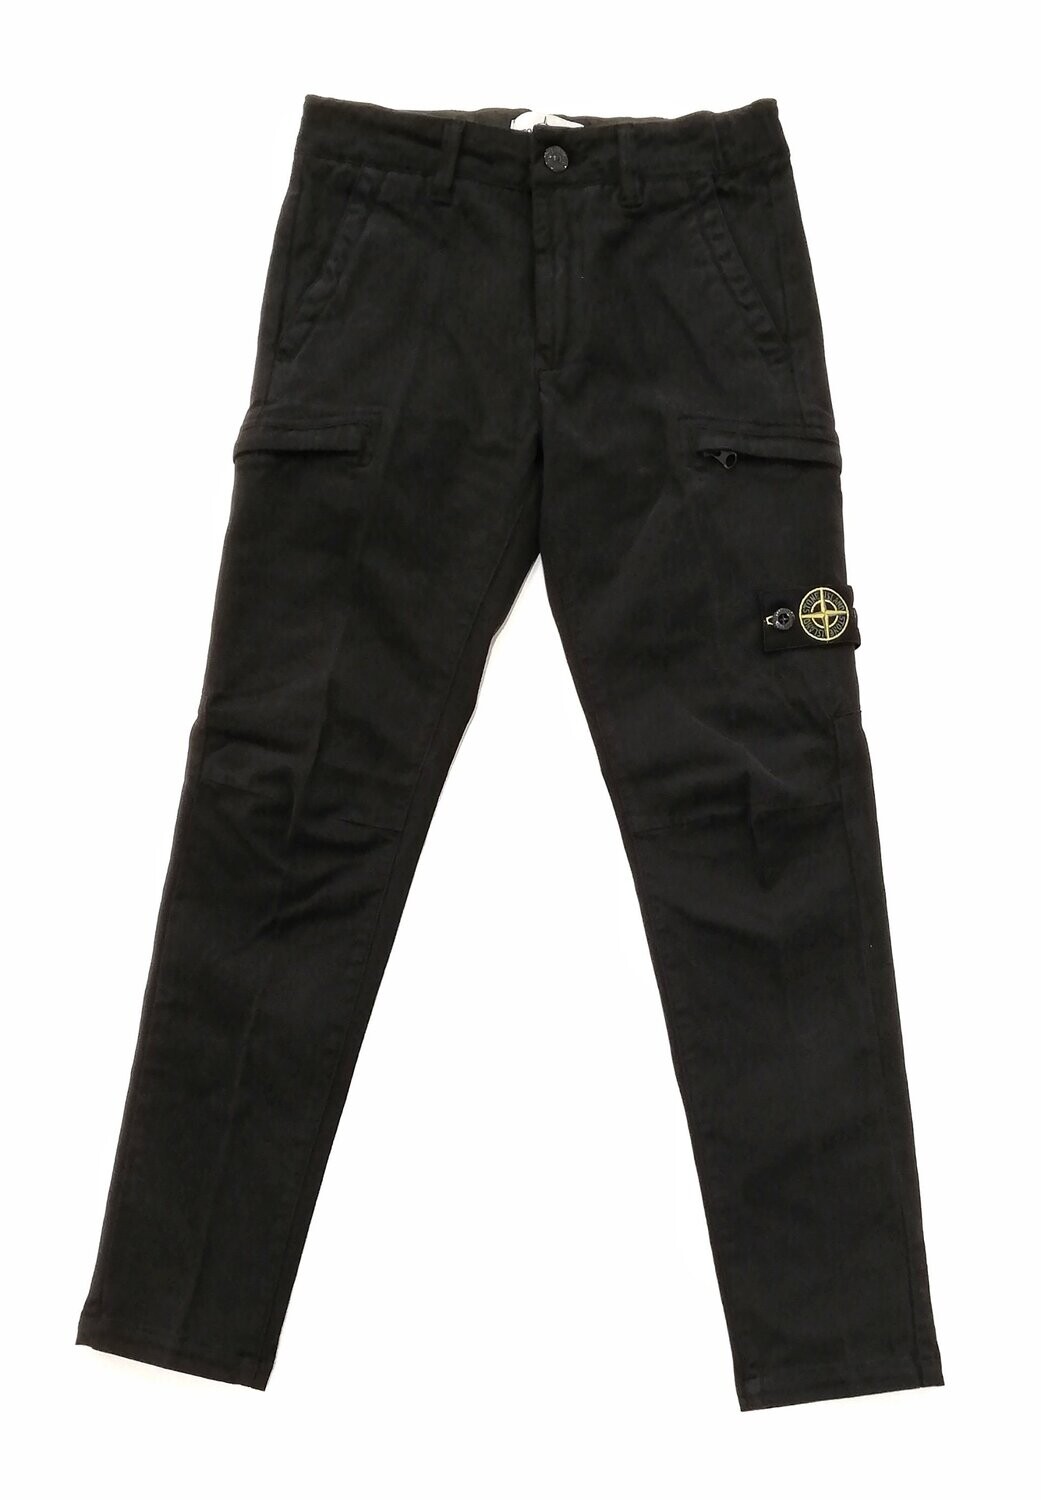 Stone Island - Pantalone nero doppia tasca, size: 8 anni